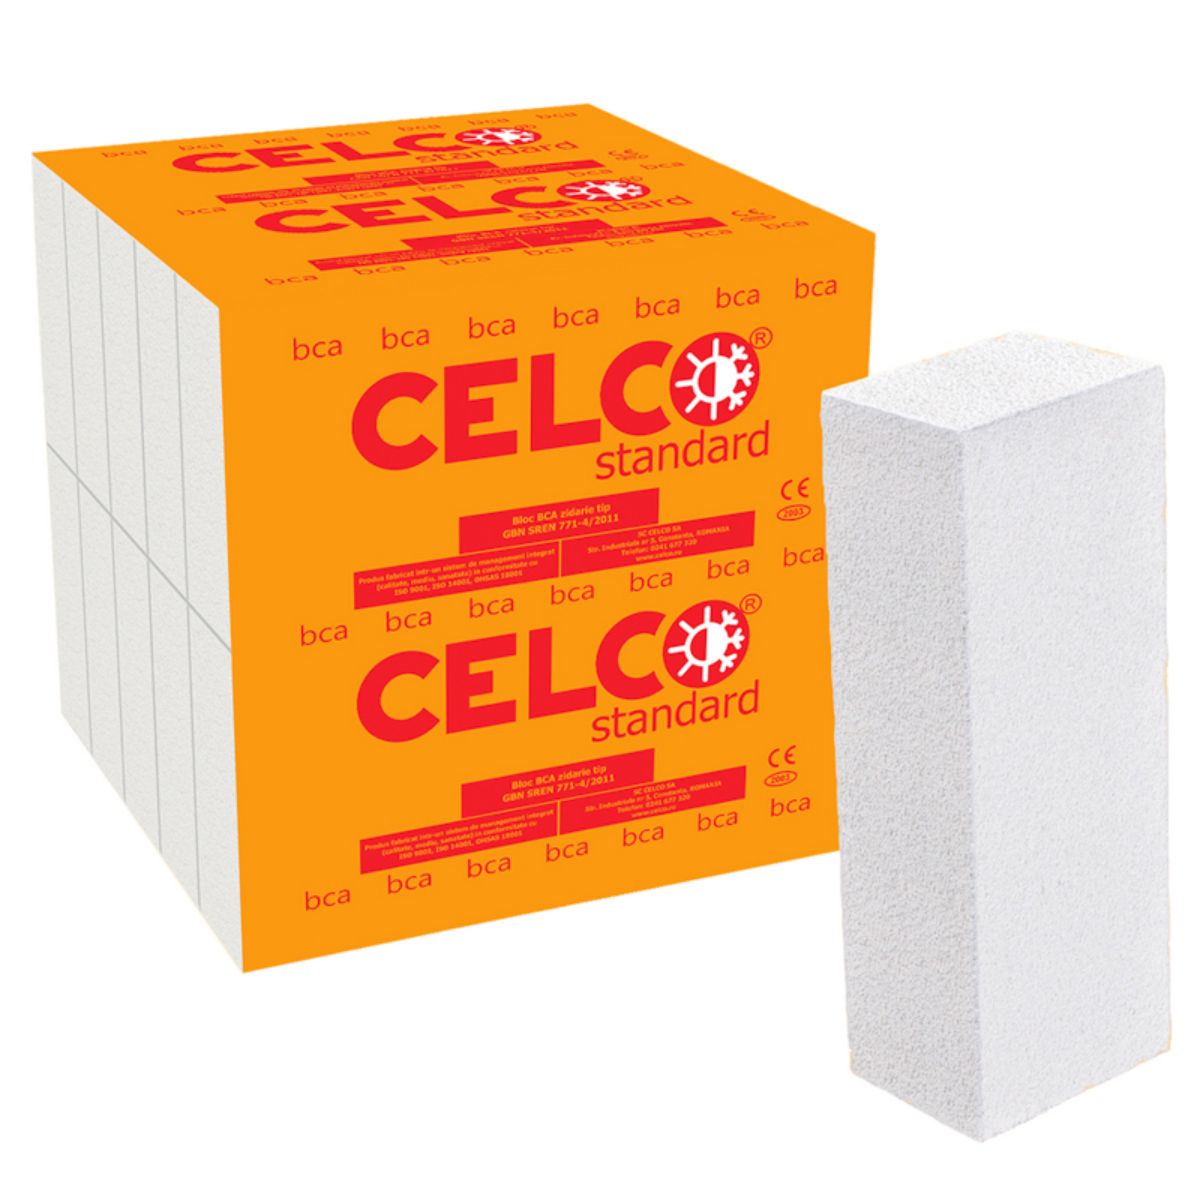 BCA Celco Standard 625/200/240